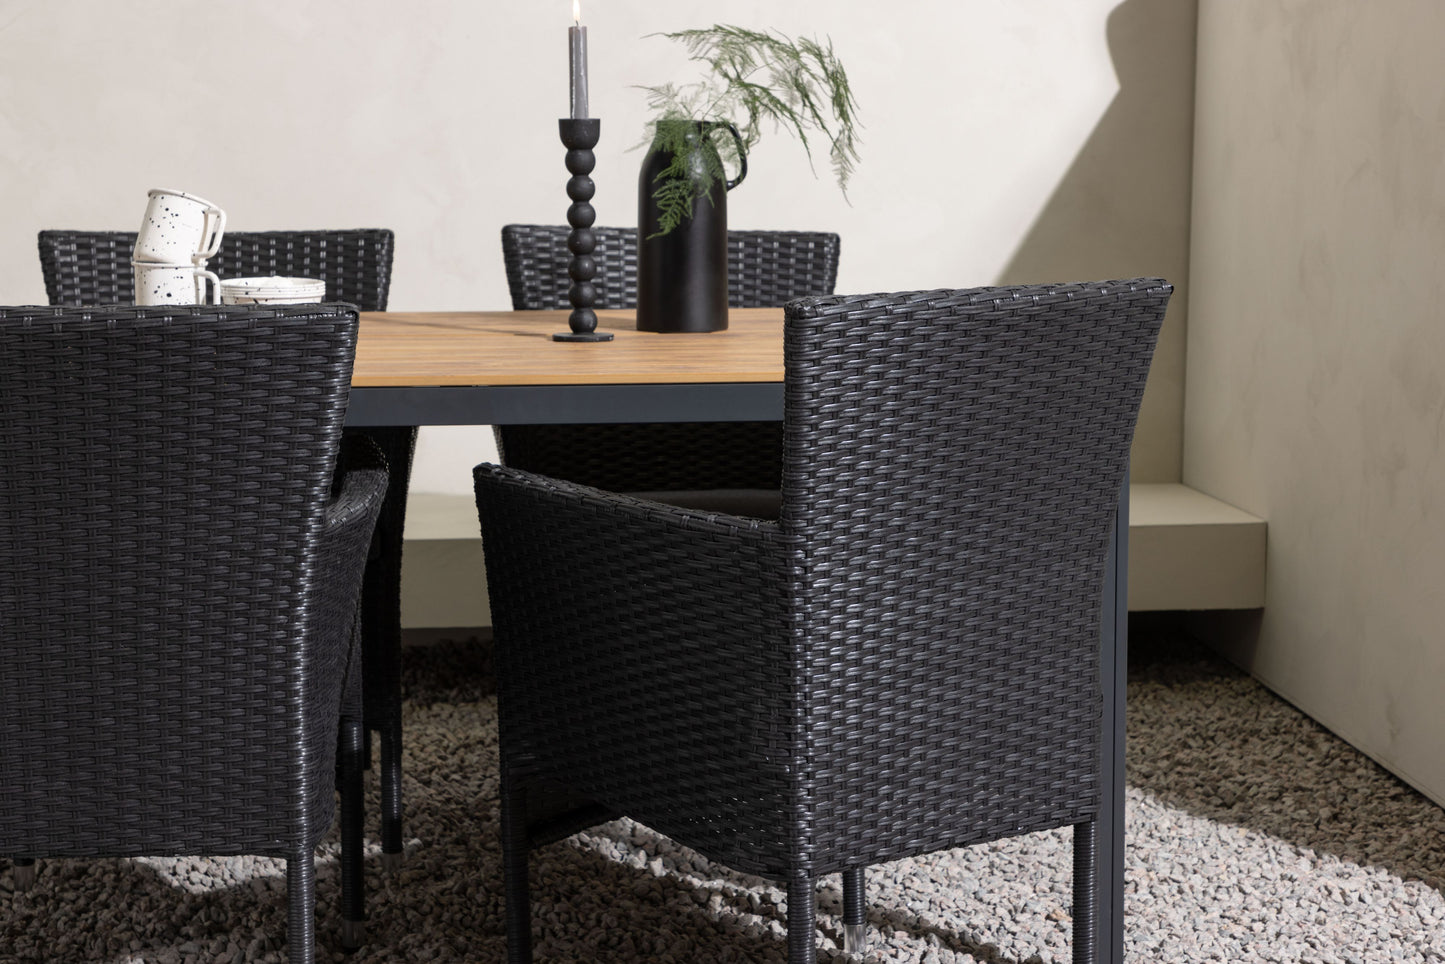 Break - Spisebord, Aluminium - Sort / Natur Rektangulær 90*150* + Malia stol Aluminium - Sort / flet